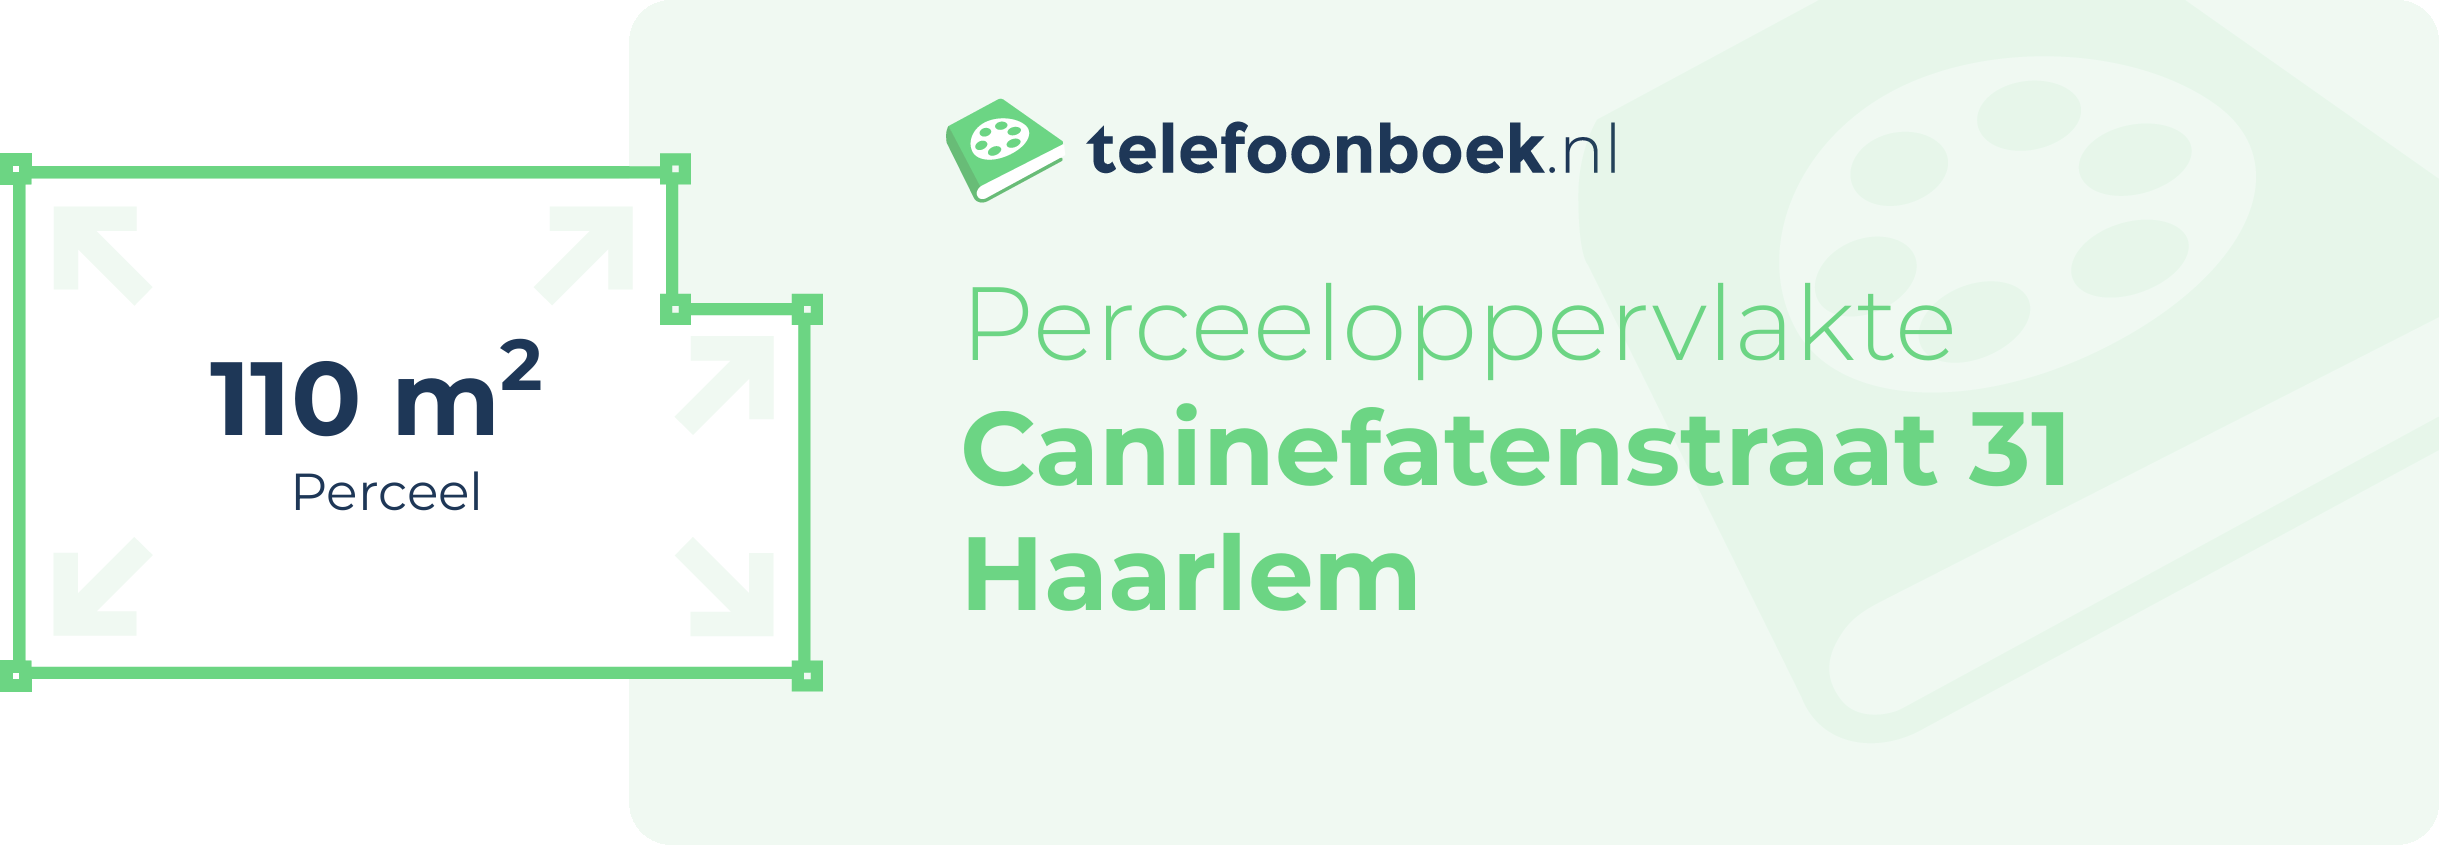 Perceeloppervlakte Caninefatenstraat 31 Haarlem